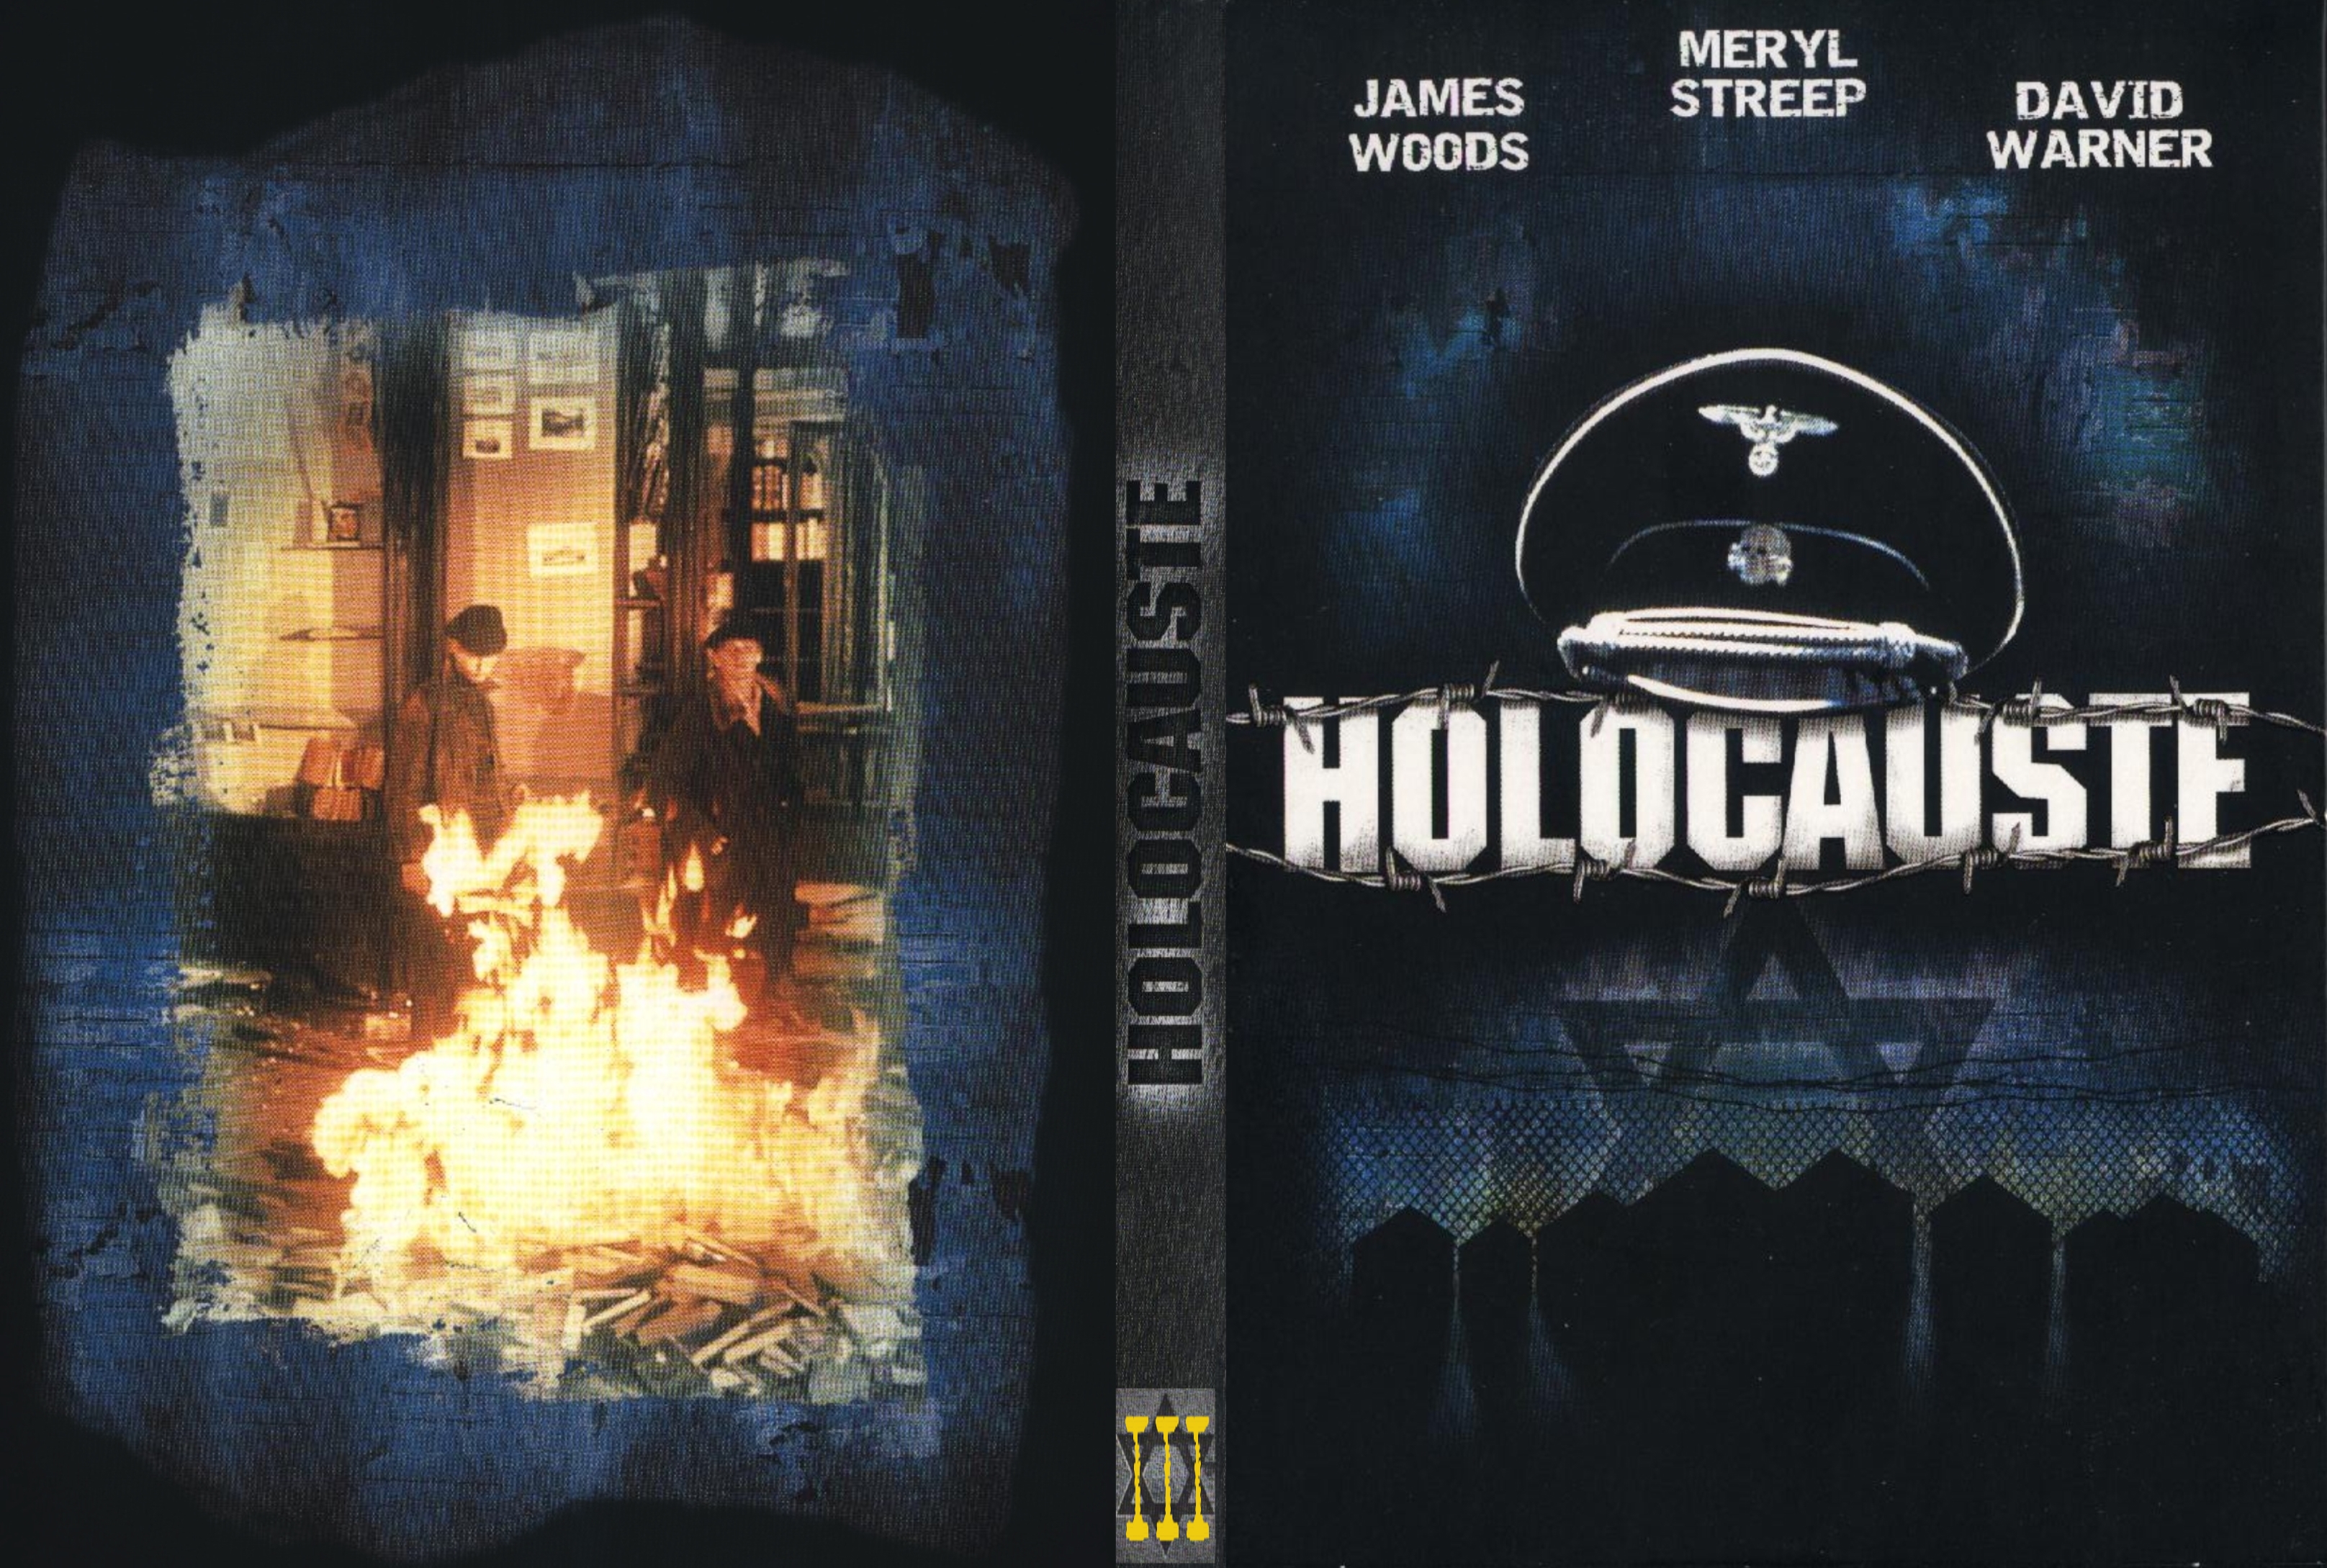 Jaquette DVD Holocauste DVD 3